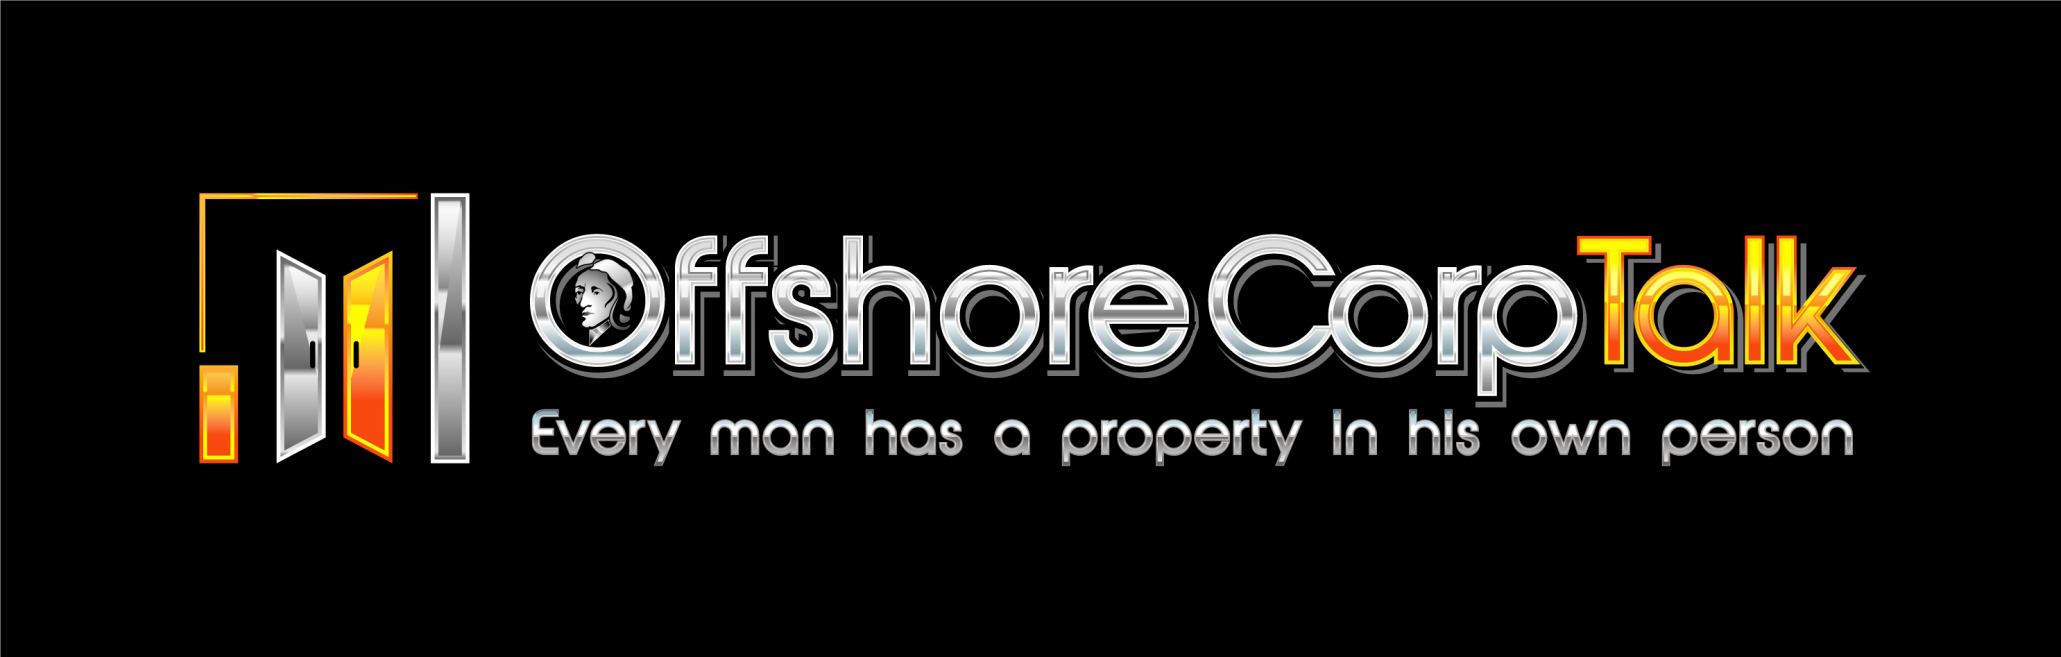 OffshoreCorpTalk Logo